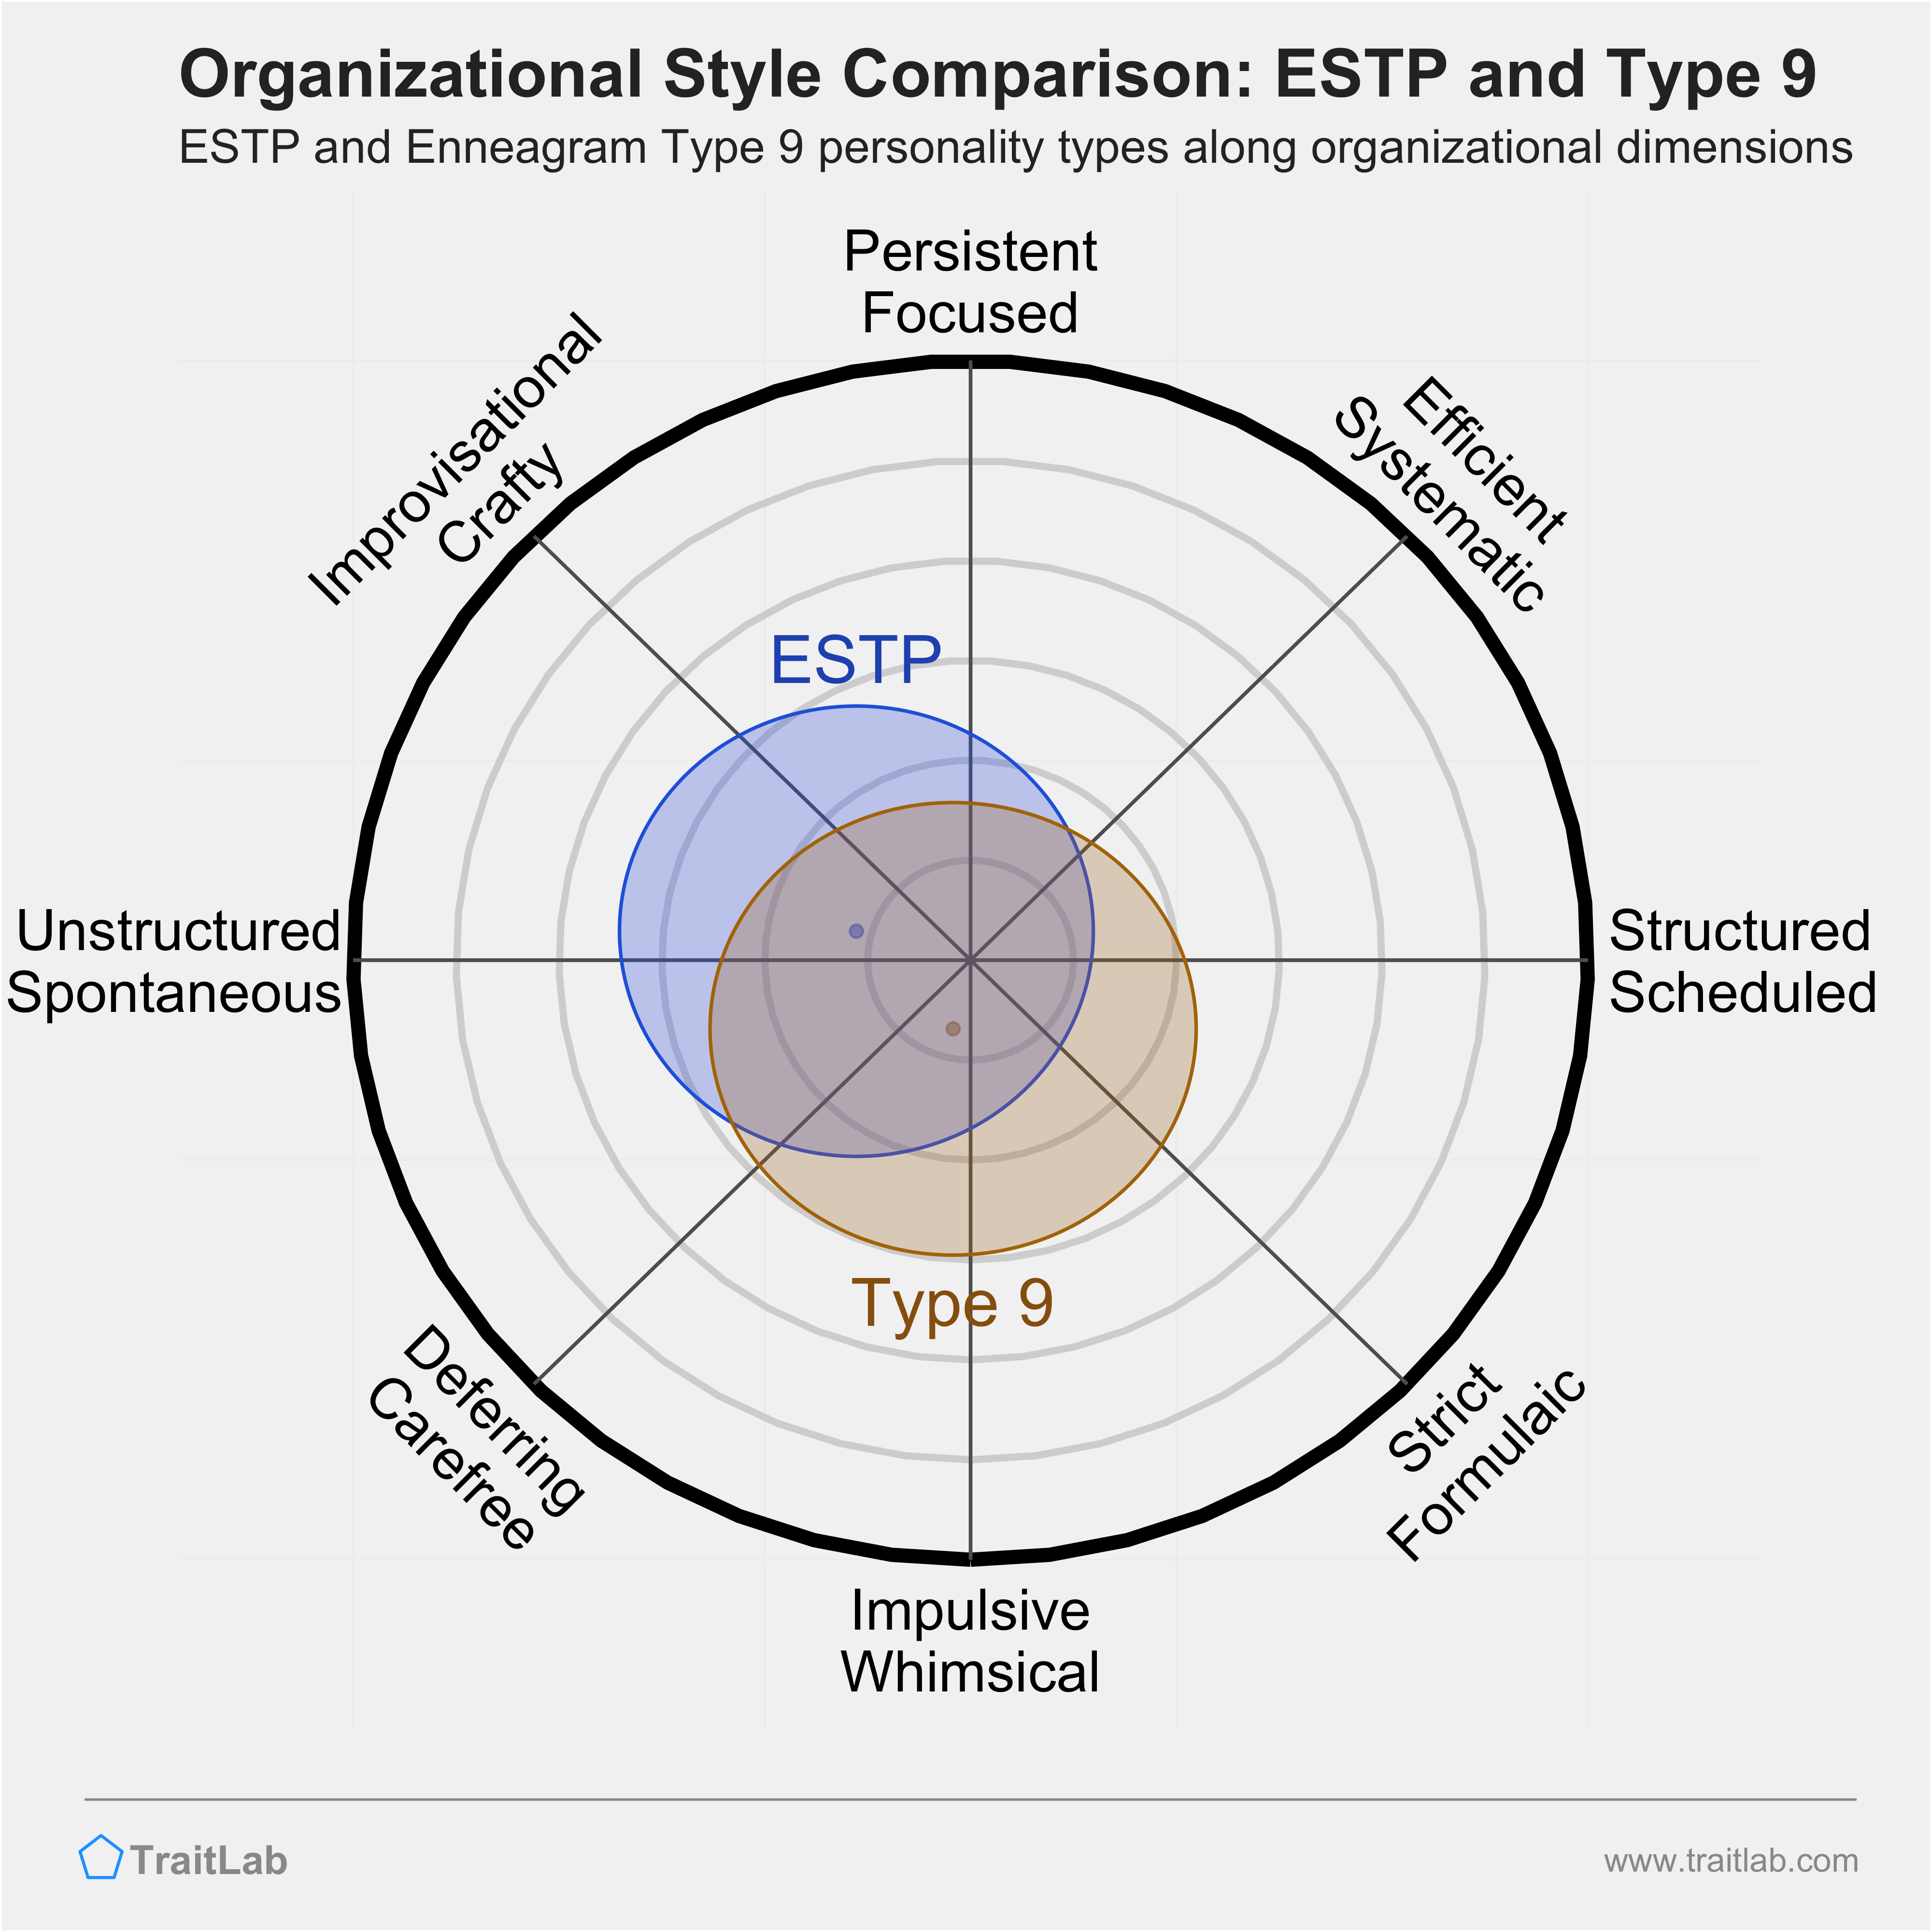 ESTP and Type 9 comparison across organizational dimensions